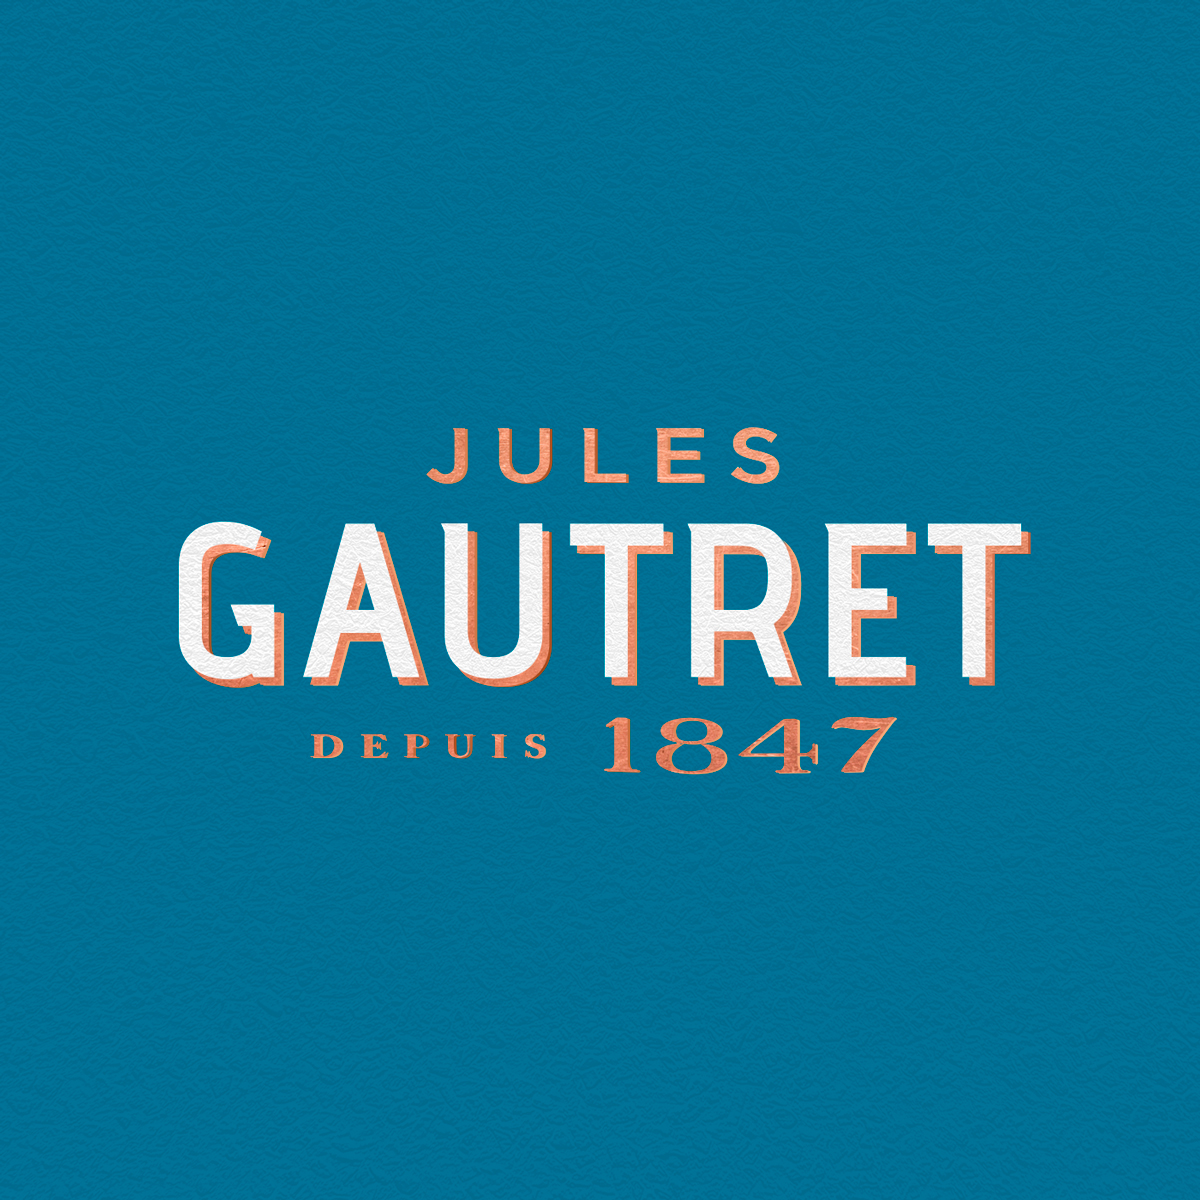 Maison Linea Relift Jules Gautret Cognac Range - World Brand Design Society